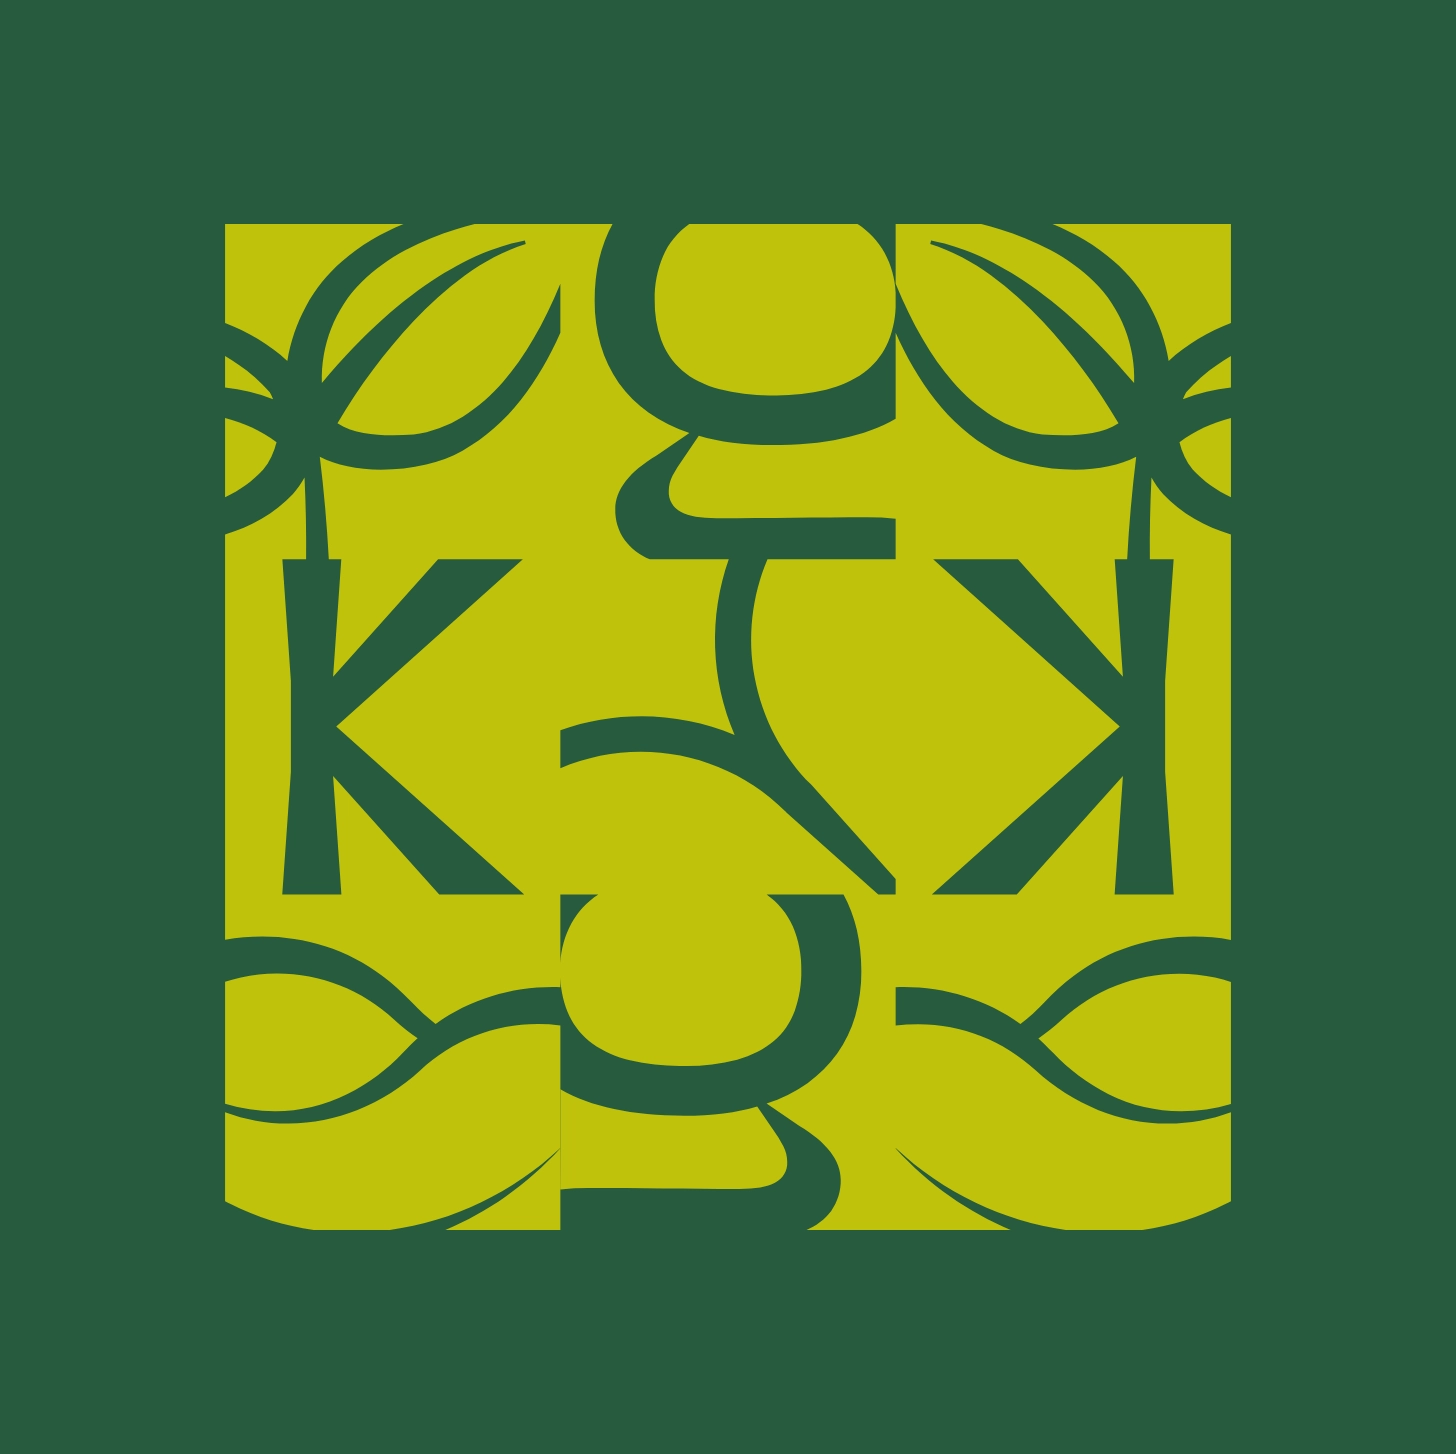 gemeente-kapelle-iconen-patroon-groen-case-blackdesk